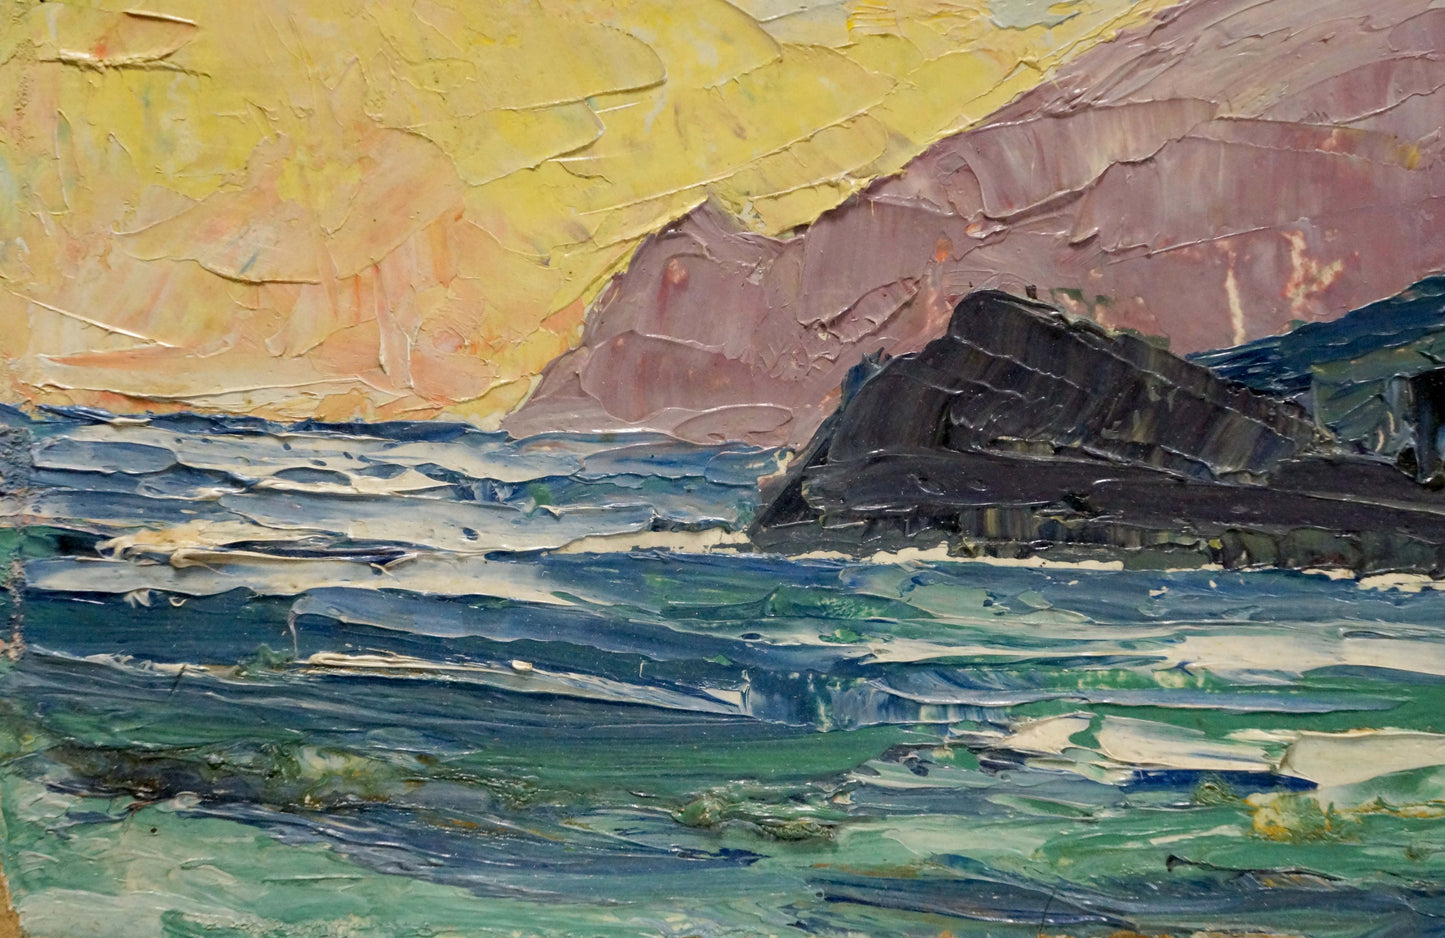 Oil painting Sea landscape Sigalevich L.E.